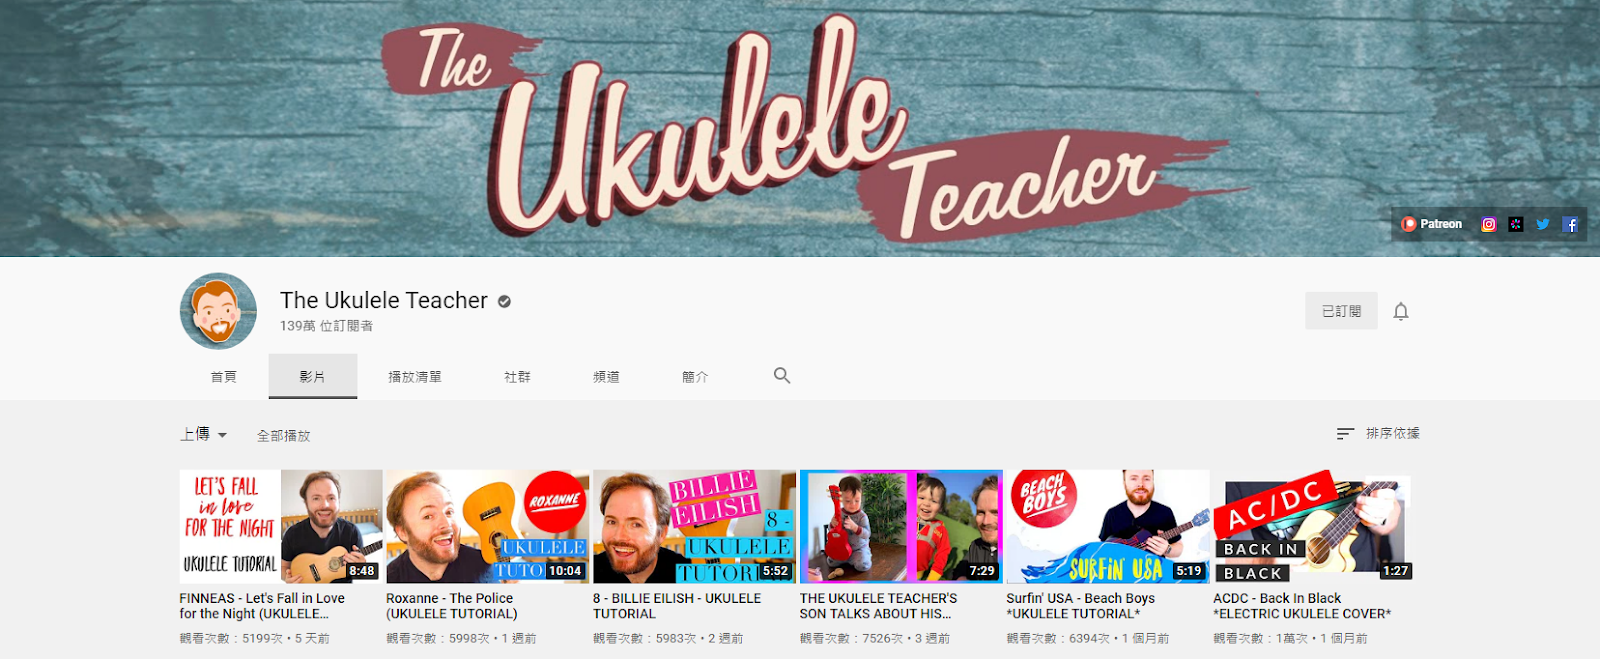 The ukulele teacher